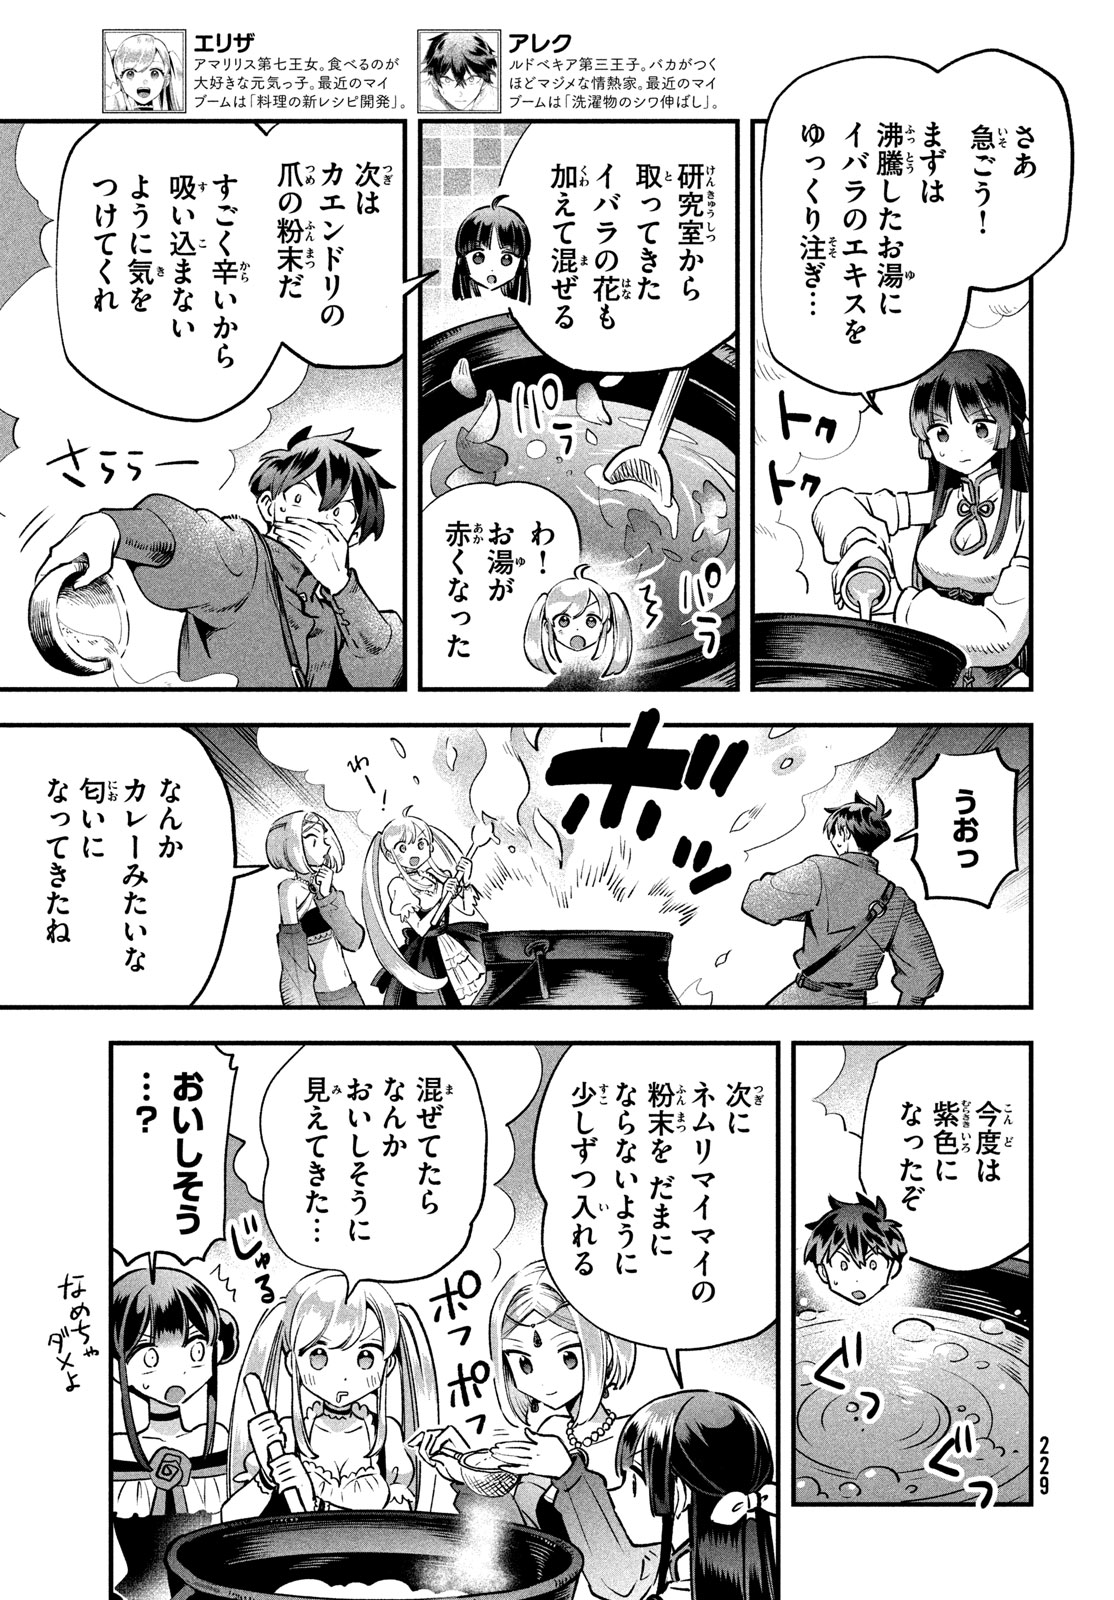 7-nin no Nemuri Hime - Chapter 46 - Page 3